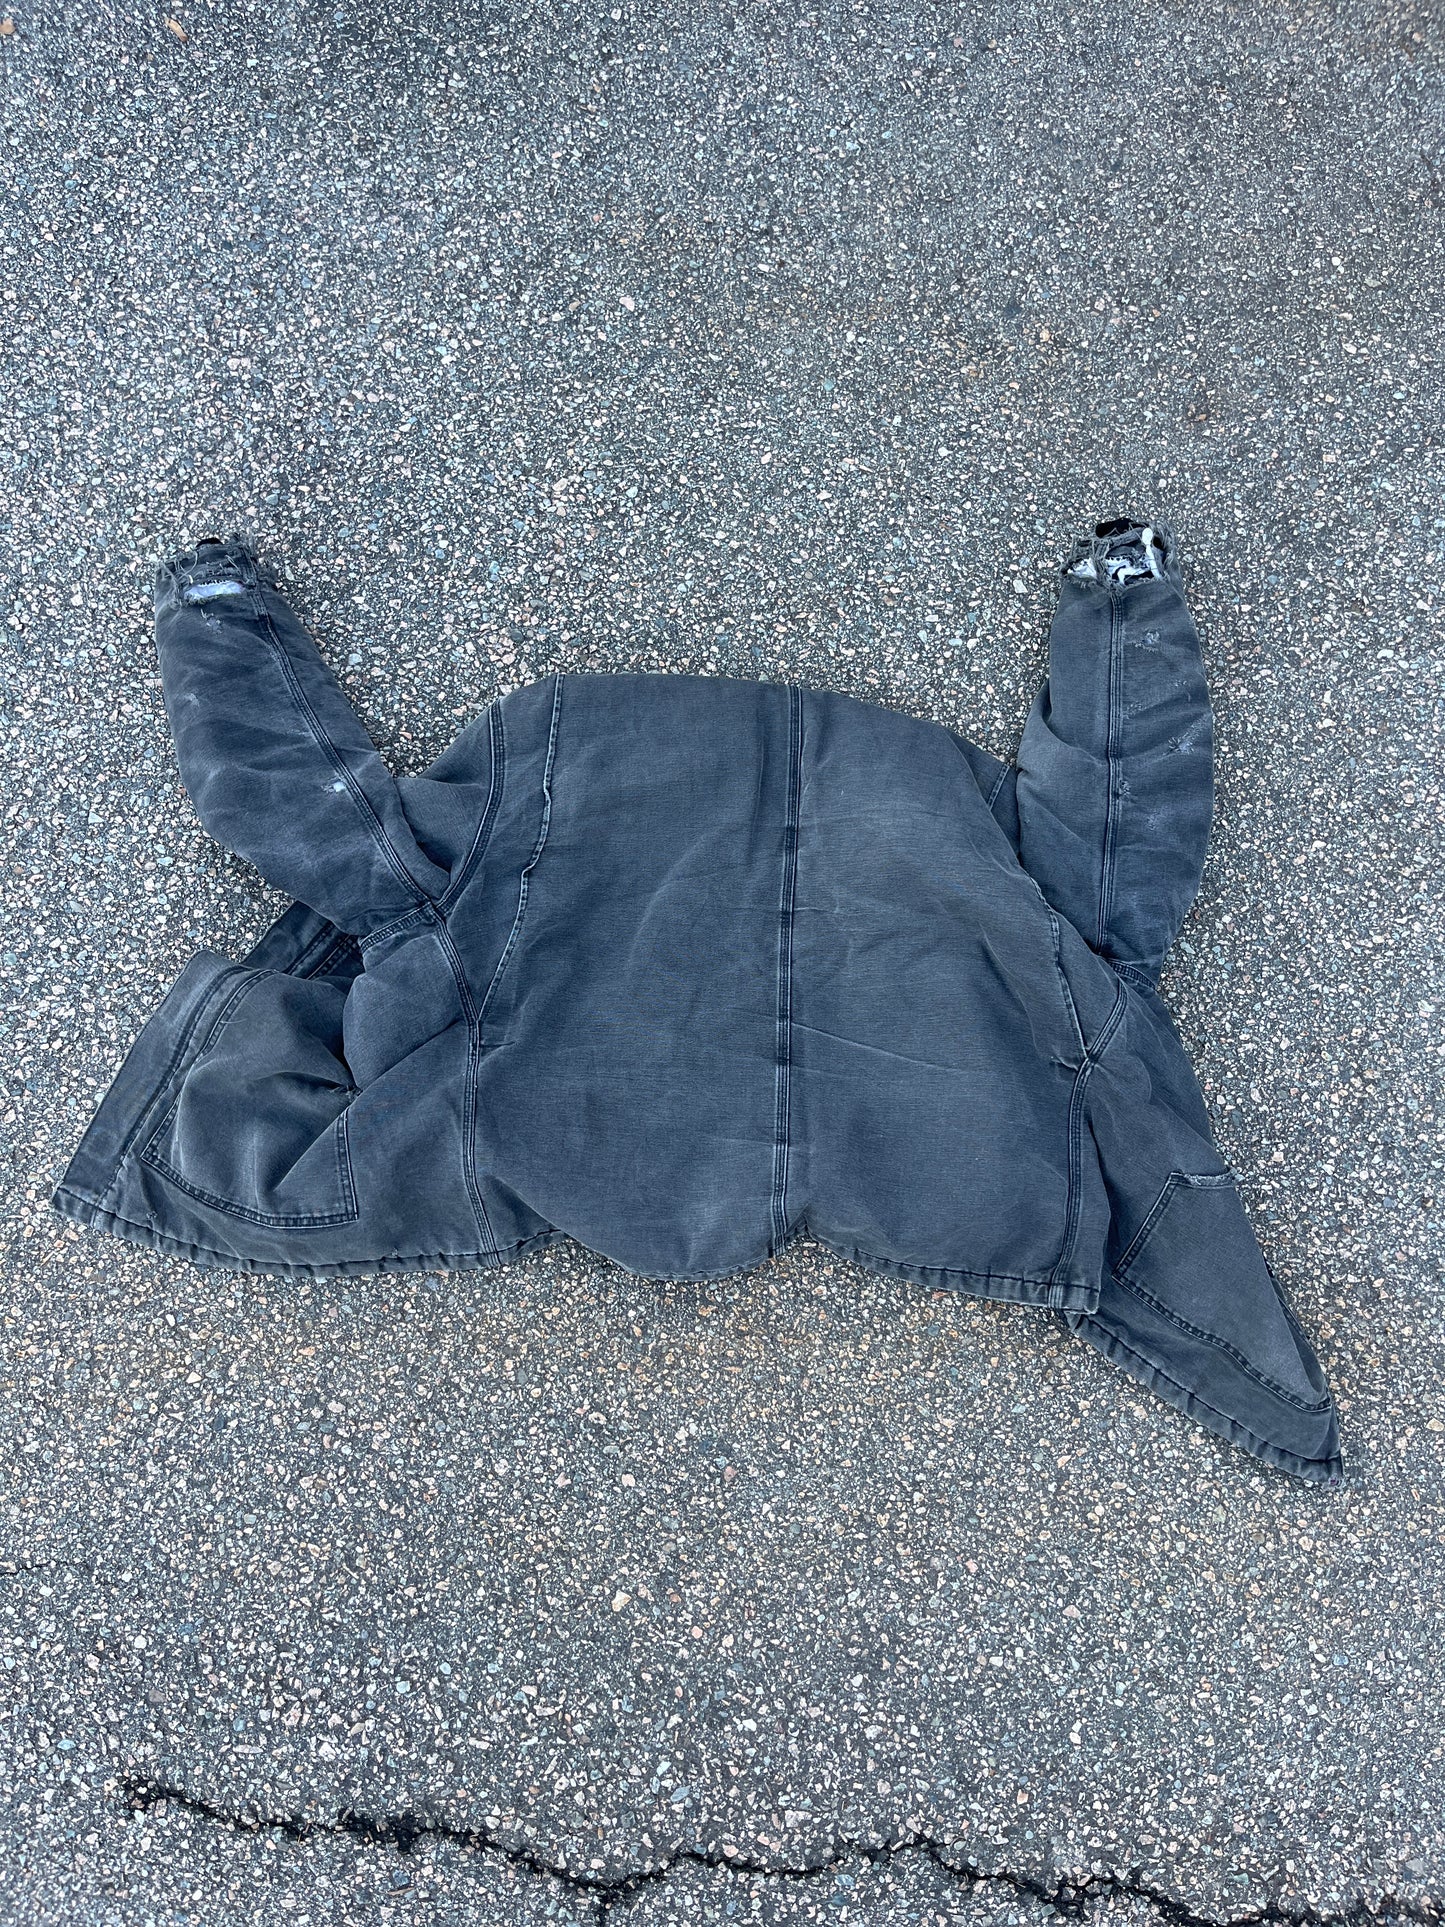 Faded n Distressed Black Carhartt Arctic Style Jacket - Boxy XL-2XL